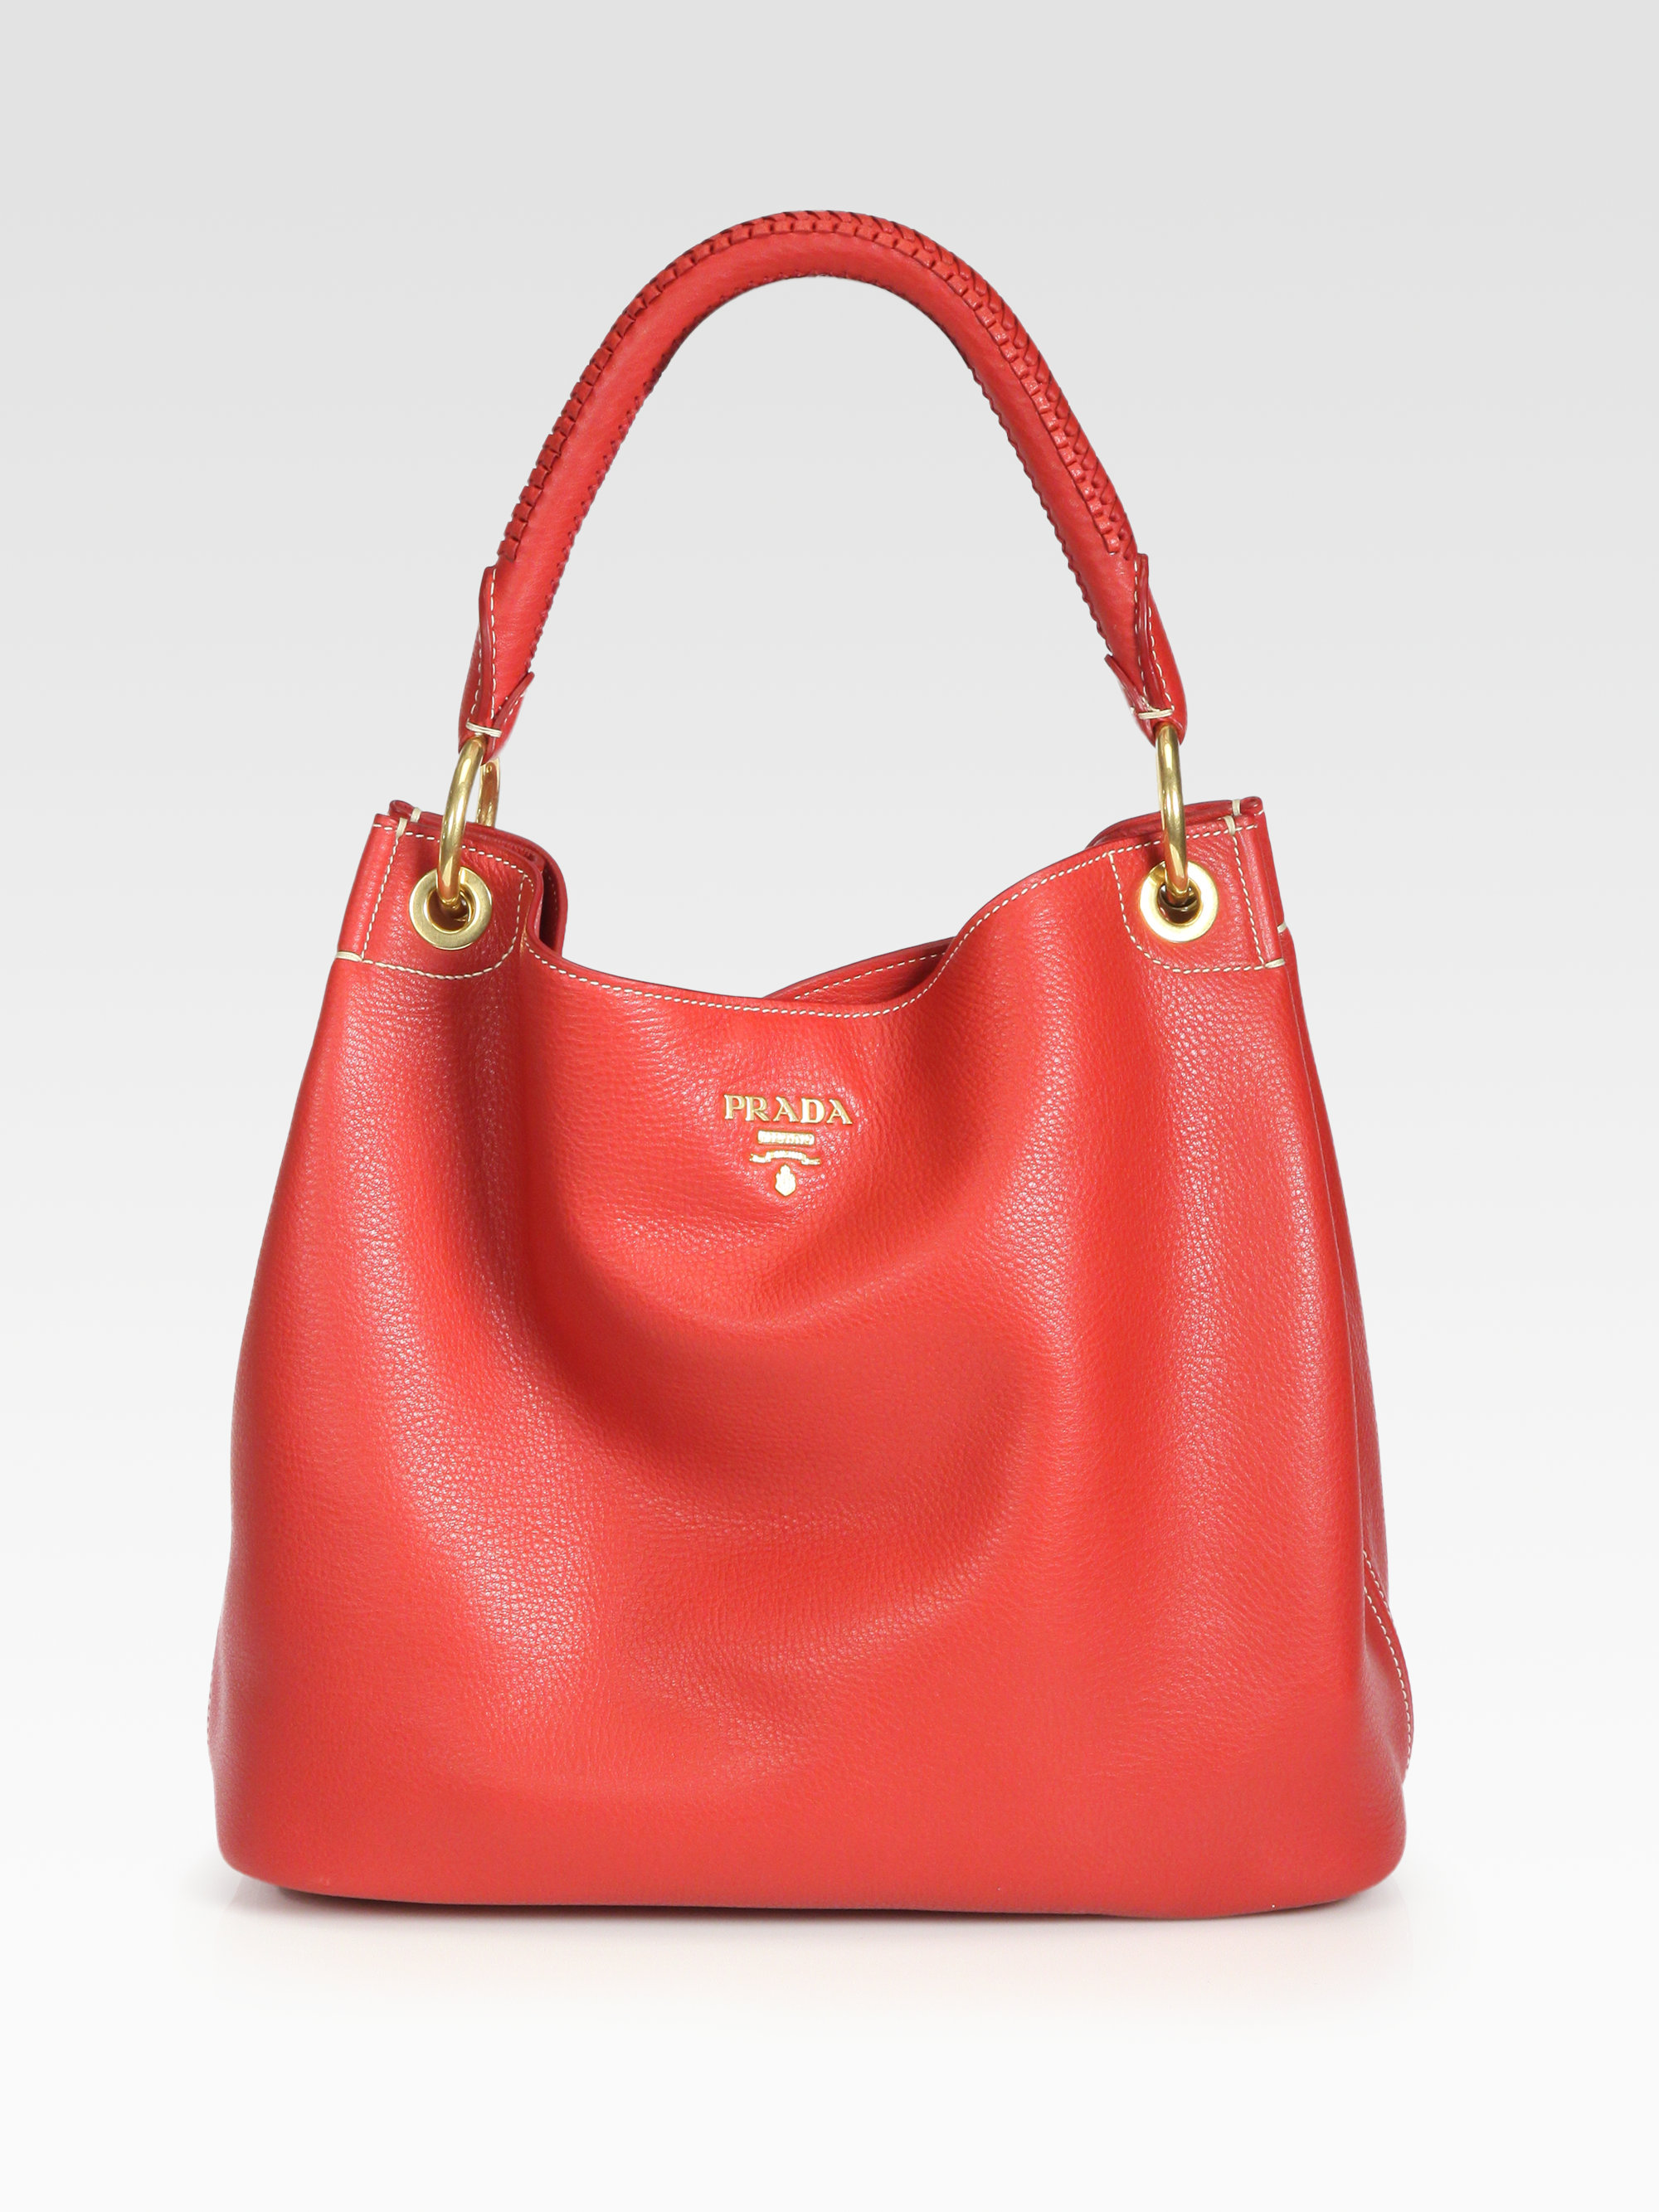 Bruno Rossi Italian Made Burgundy Red Leather Hobo Bag-A150-